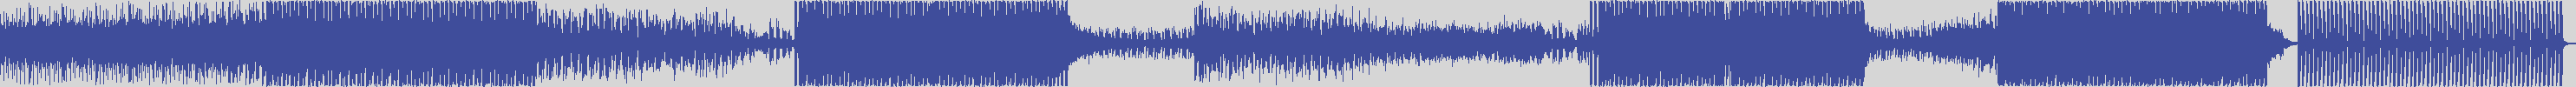 suxess [SX004] Nari - Bucci Bag [Original Mix] audio wave form